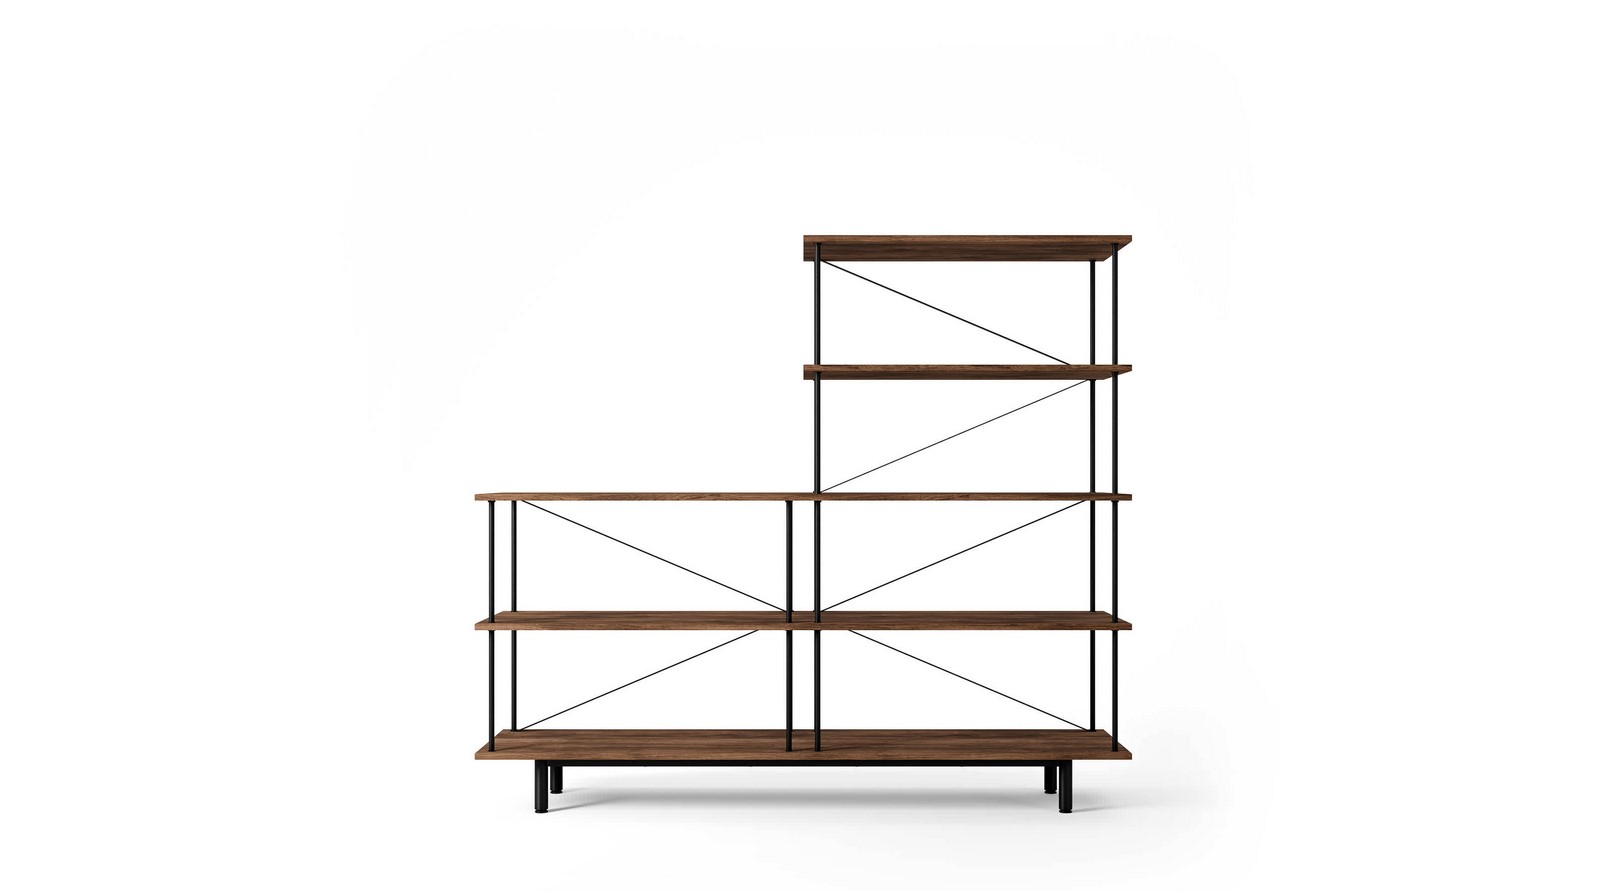 10 examples of modular furniture - Sheet23